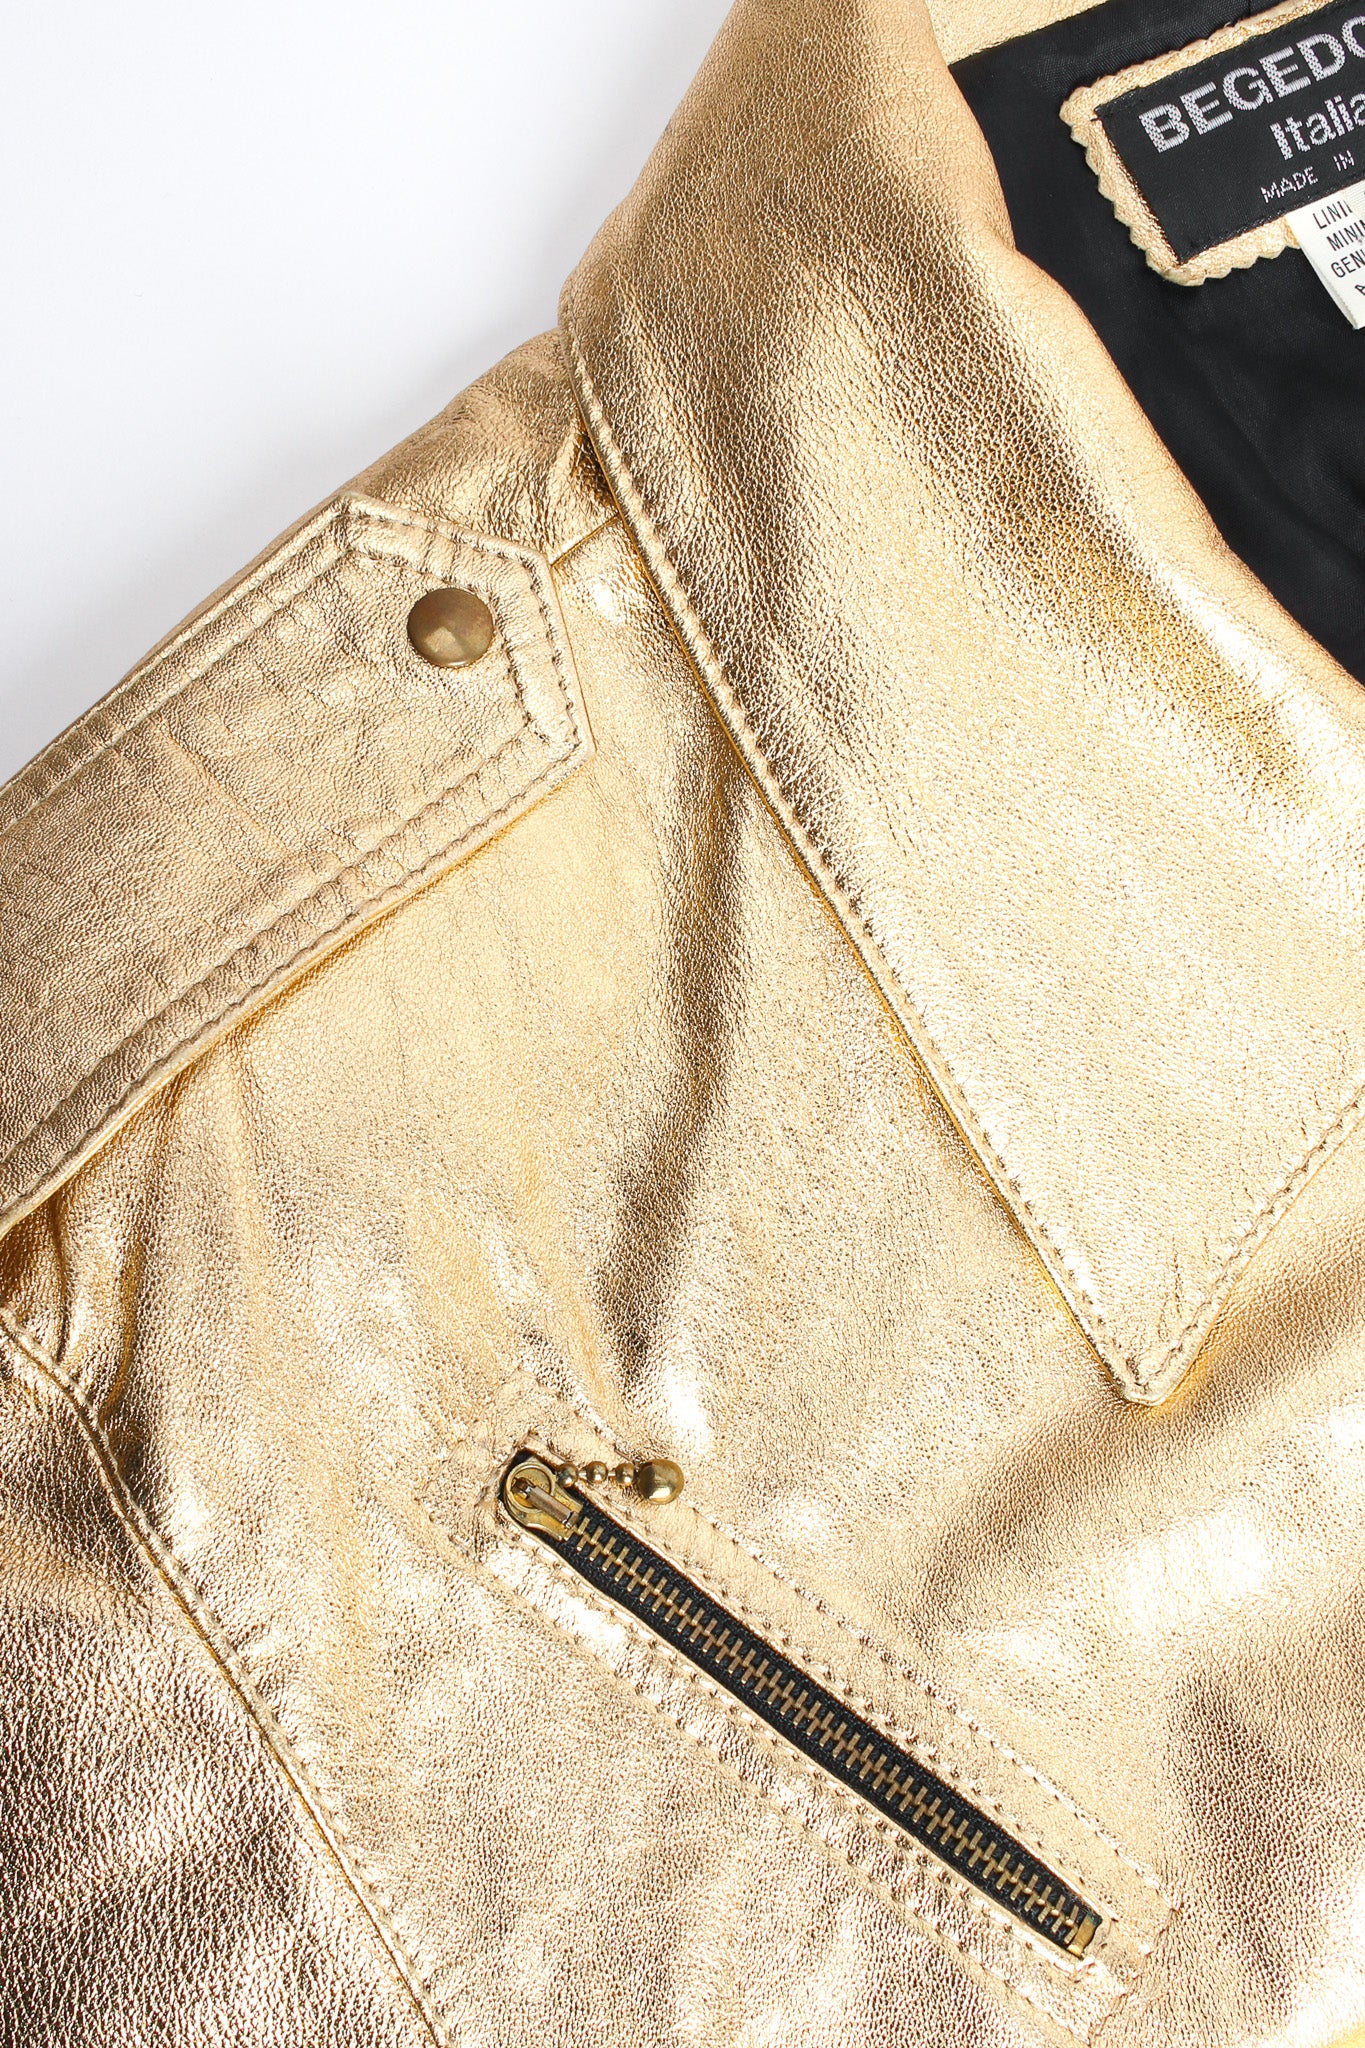 Vintage Begedor Metallic Leather Jacket top zipper/strap detail @ Recess LA